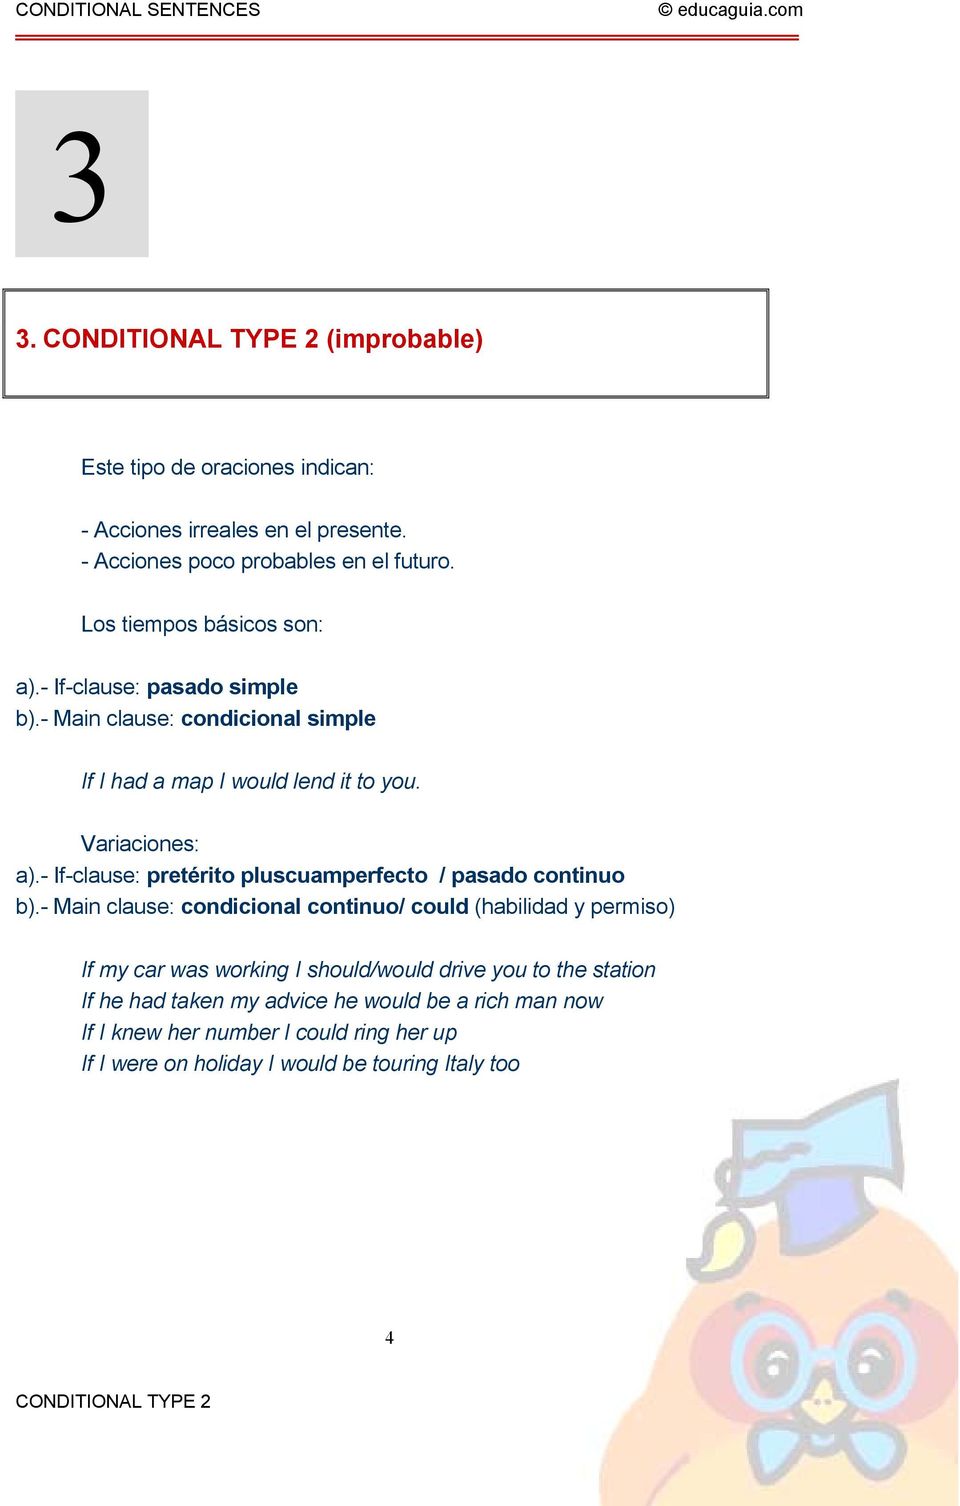 - If-clause: pretérito pluscuamperfecto / pasado continuo b).